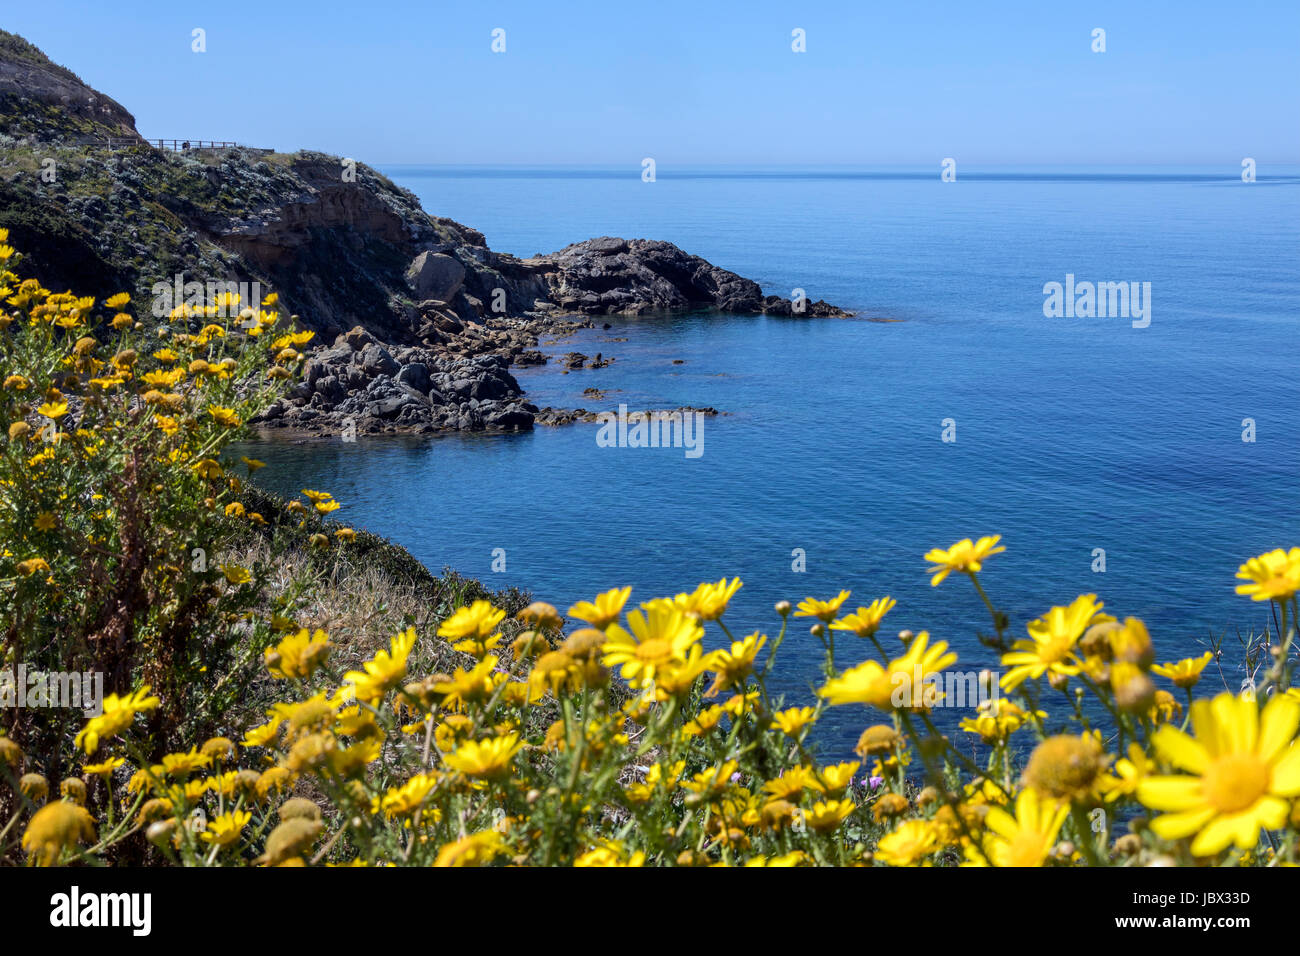 Scenic view on the northwest coast of the island of Sardinia, Italy. Stock Photo